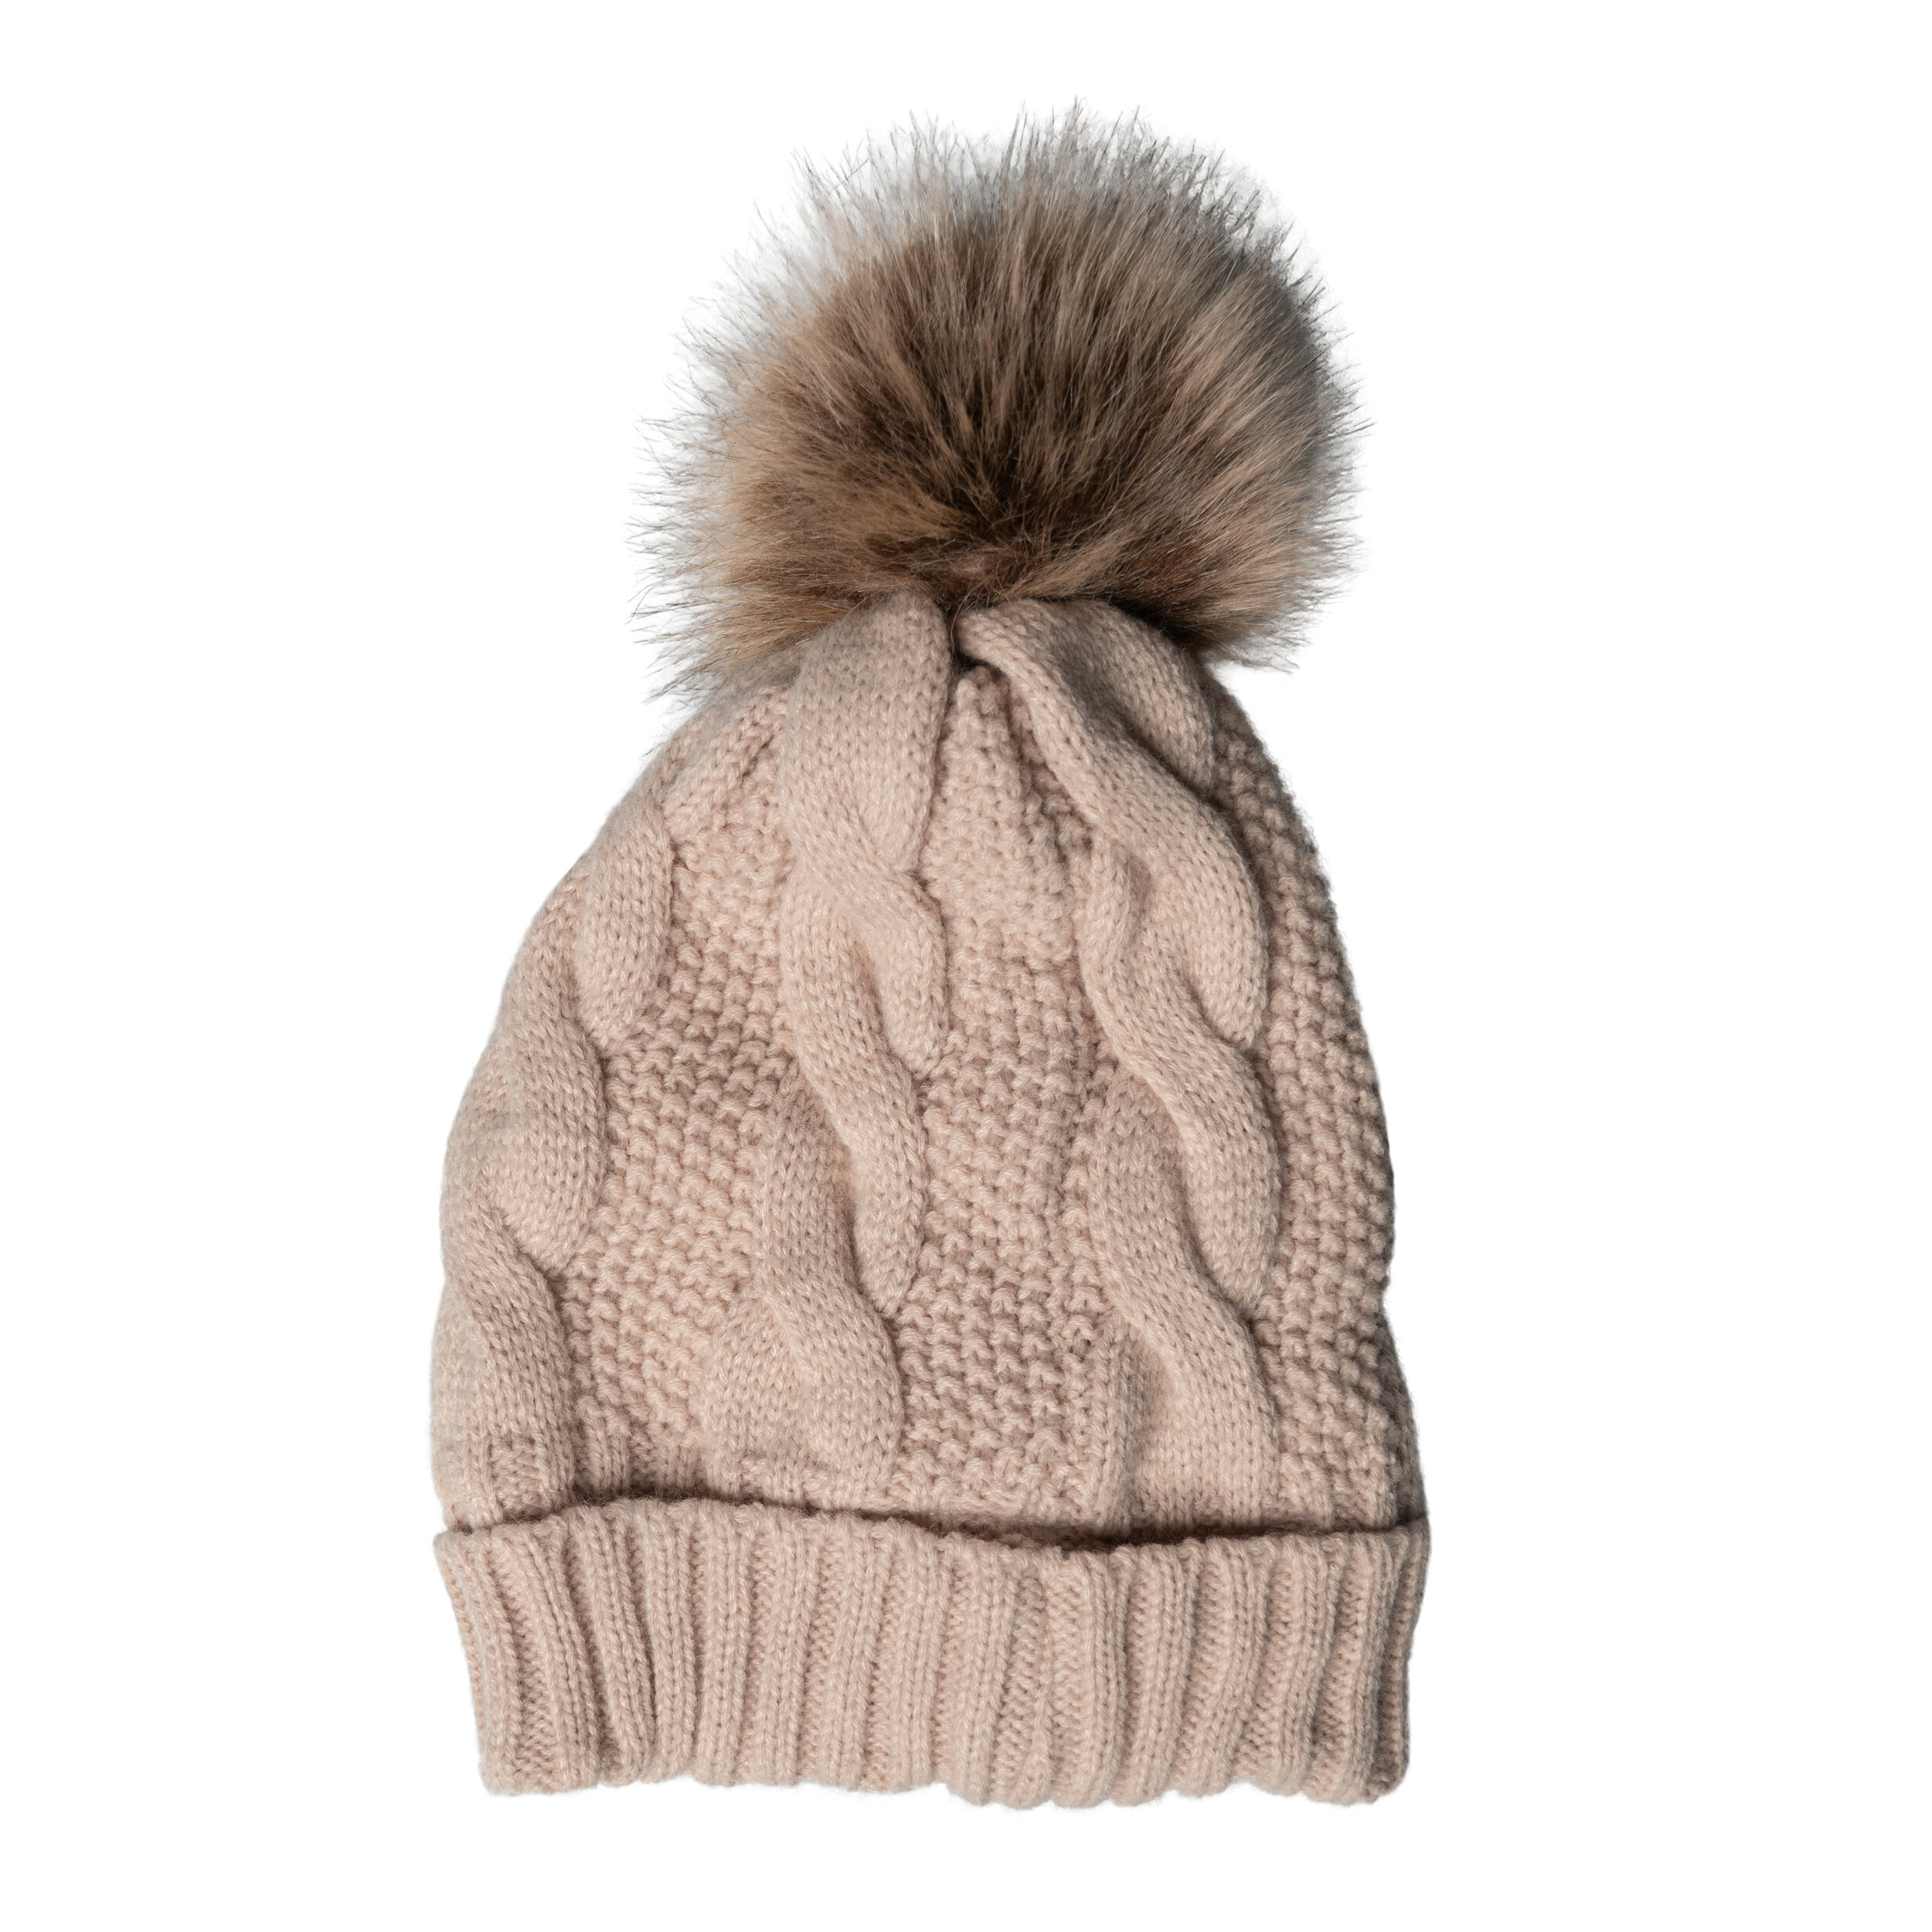 Grey fur band hat with pompom